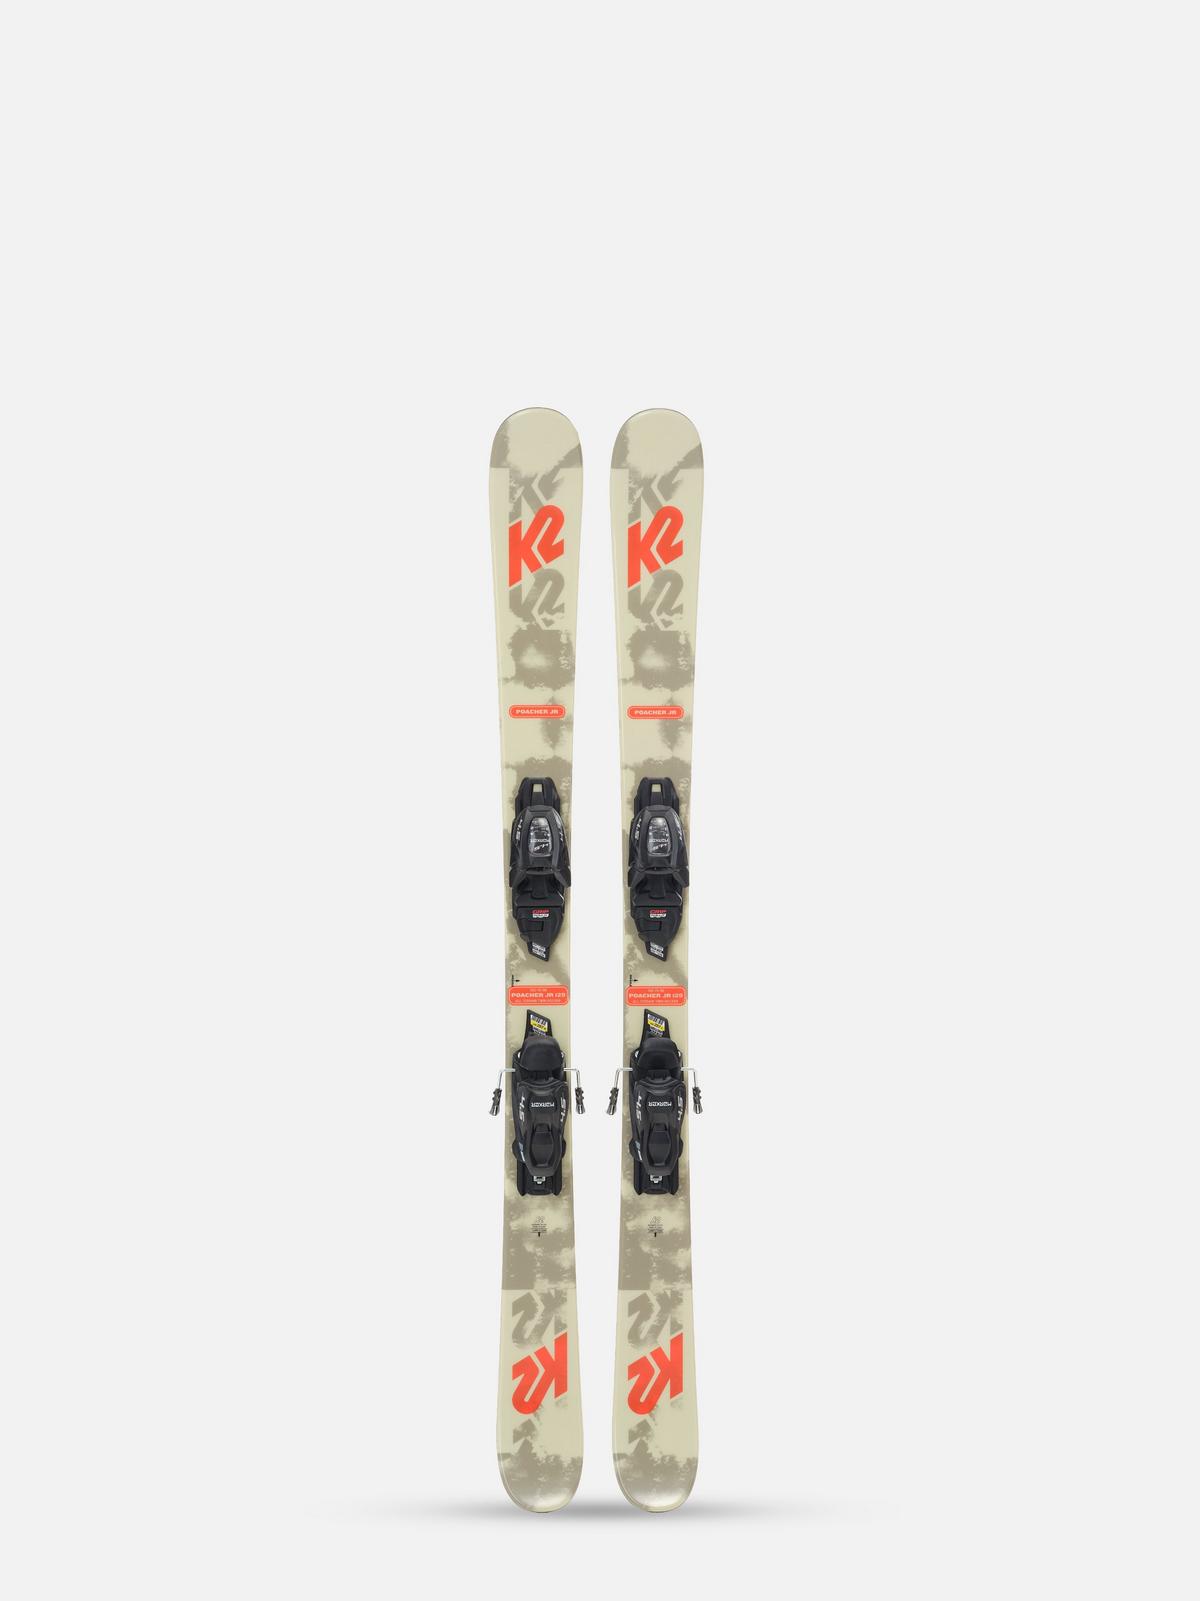 Poacher Jr. Skis | K2 Skis and K2 Snowboarding